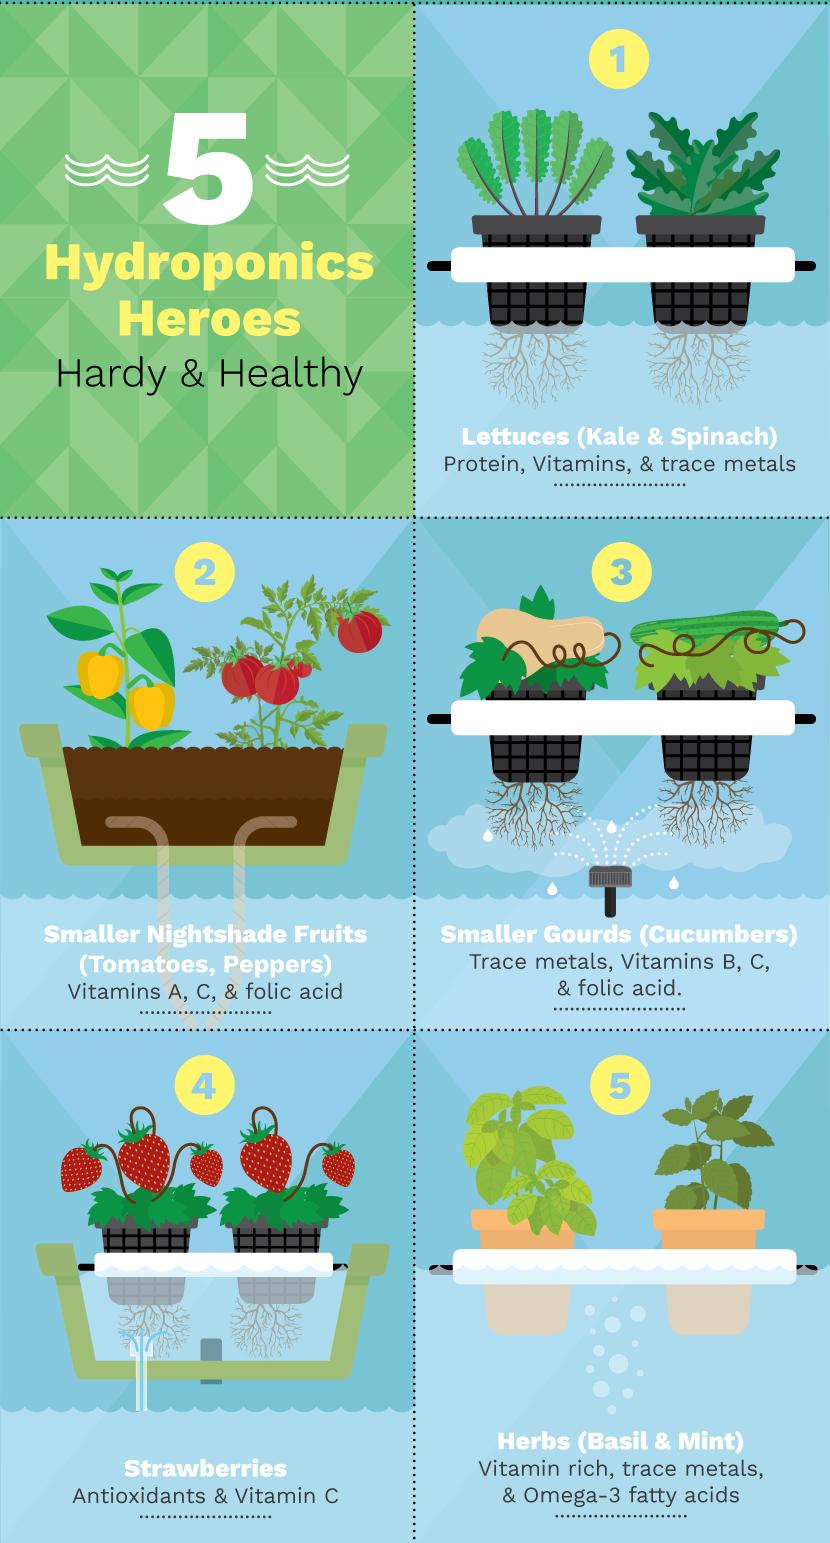 Food to grow using hydroponics